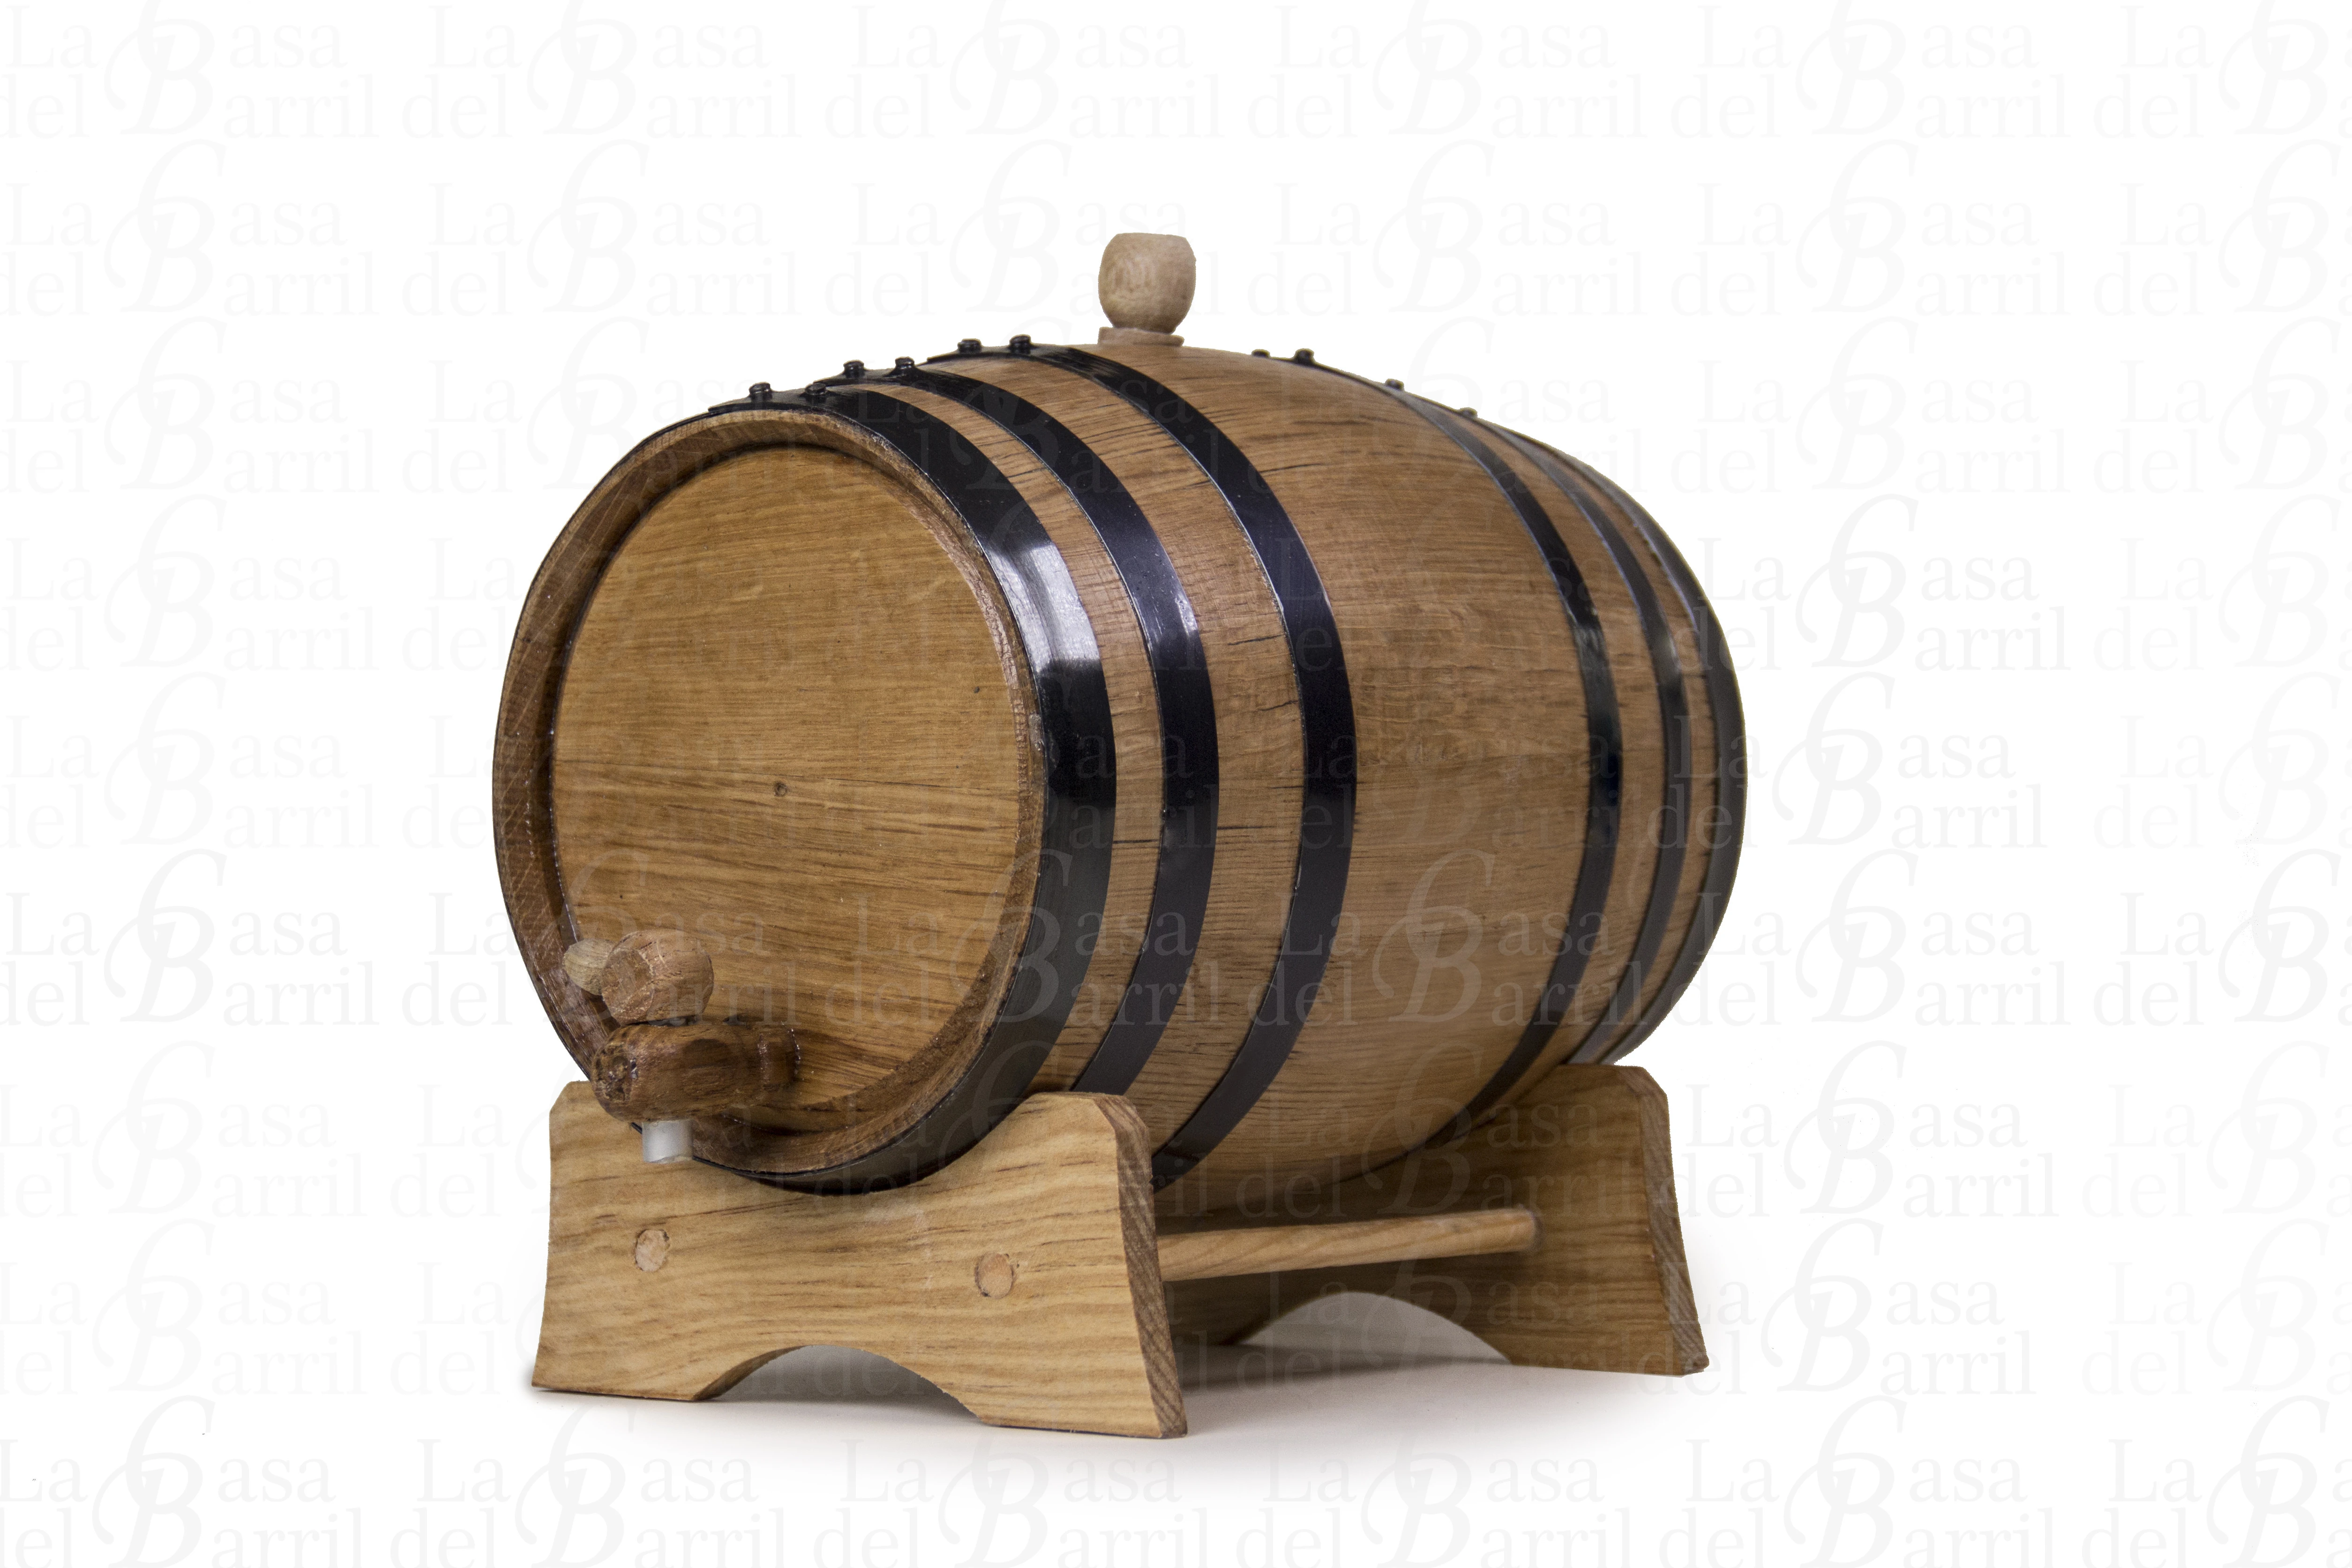 Handmade white oak barrel 3 liter , to age whiskey, tequila, ron, beer, wine